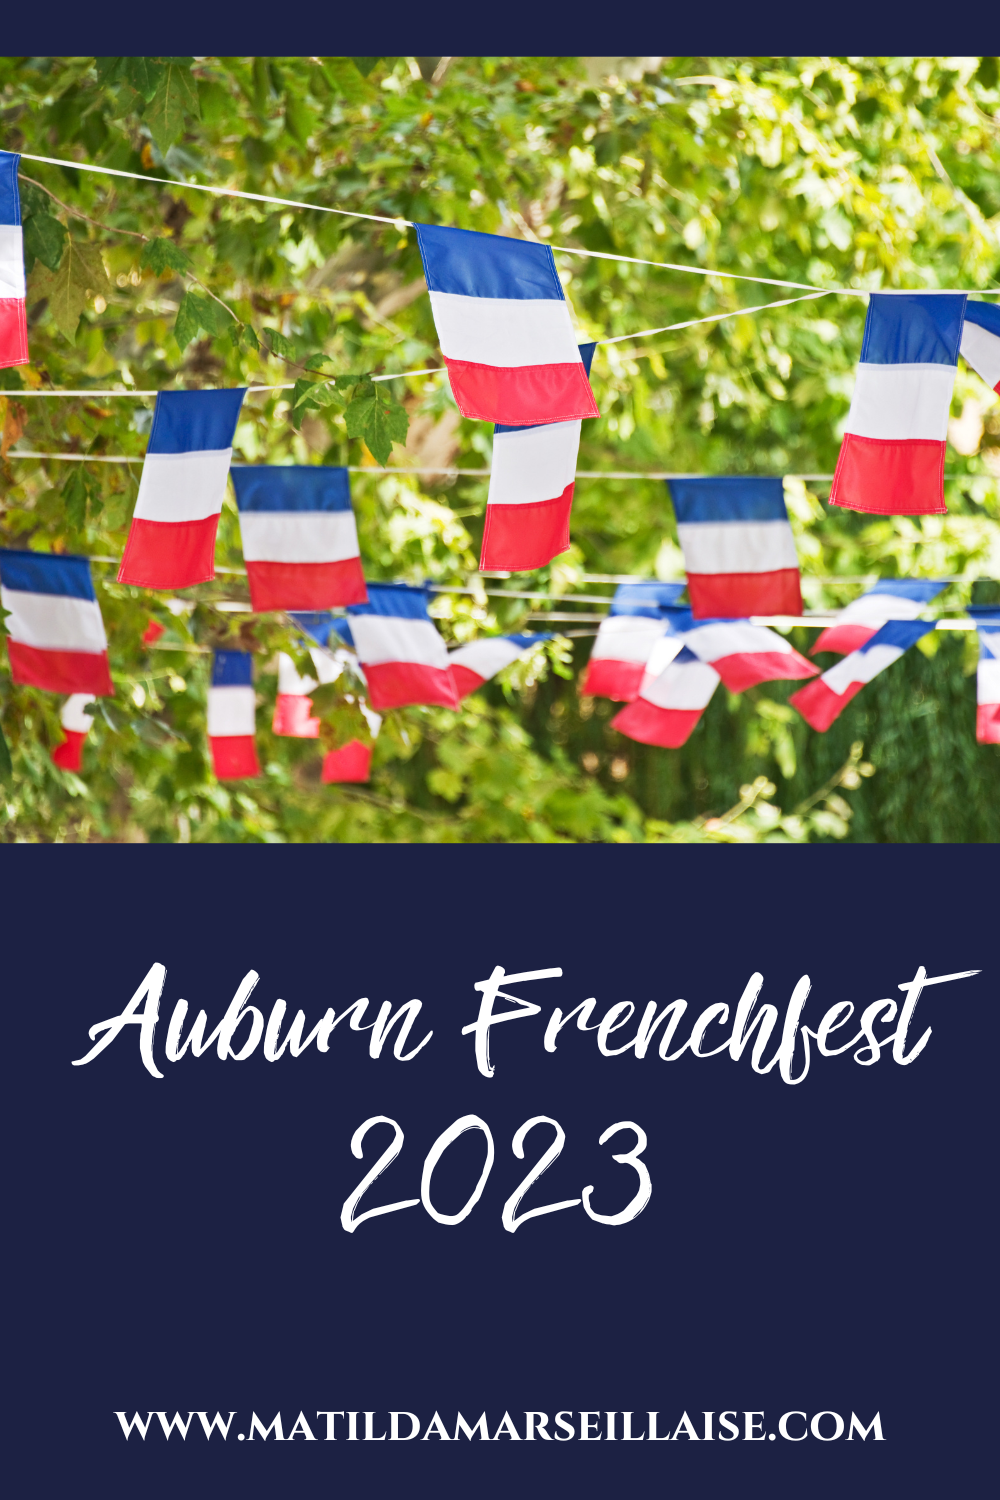 Auburn Frenchfest 2023